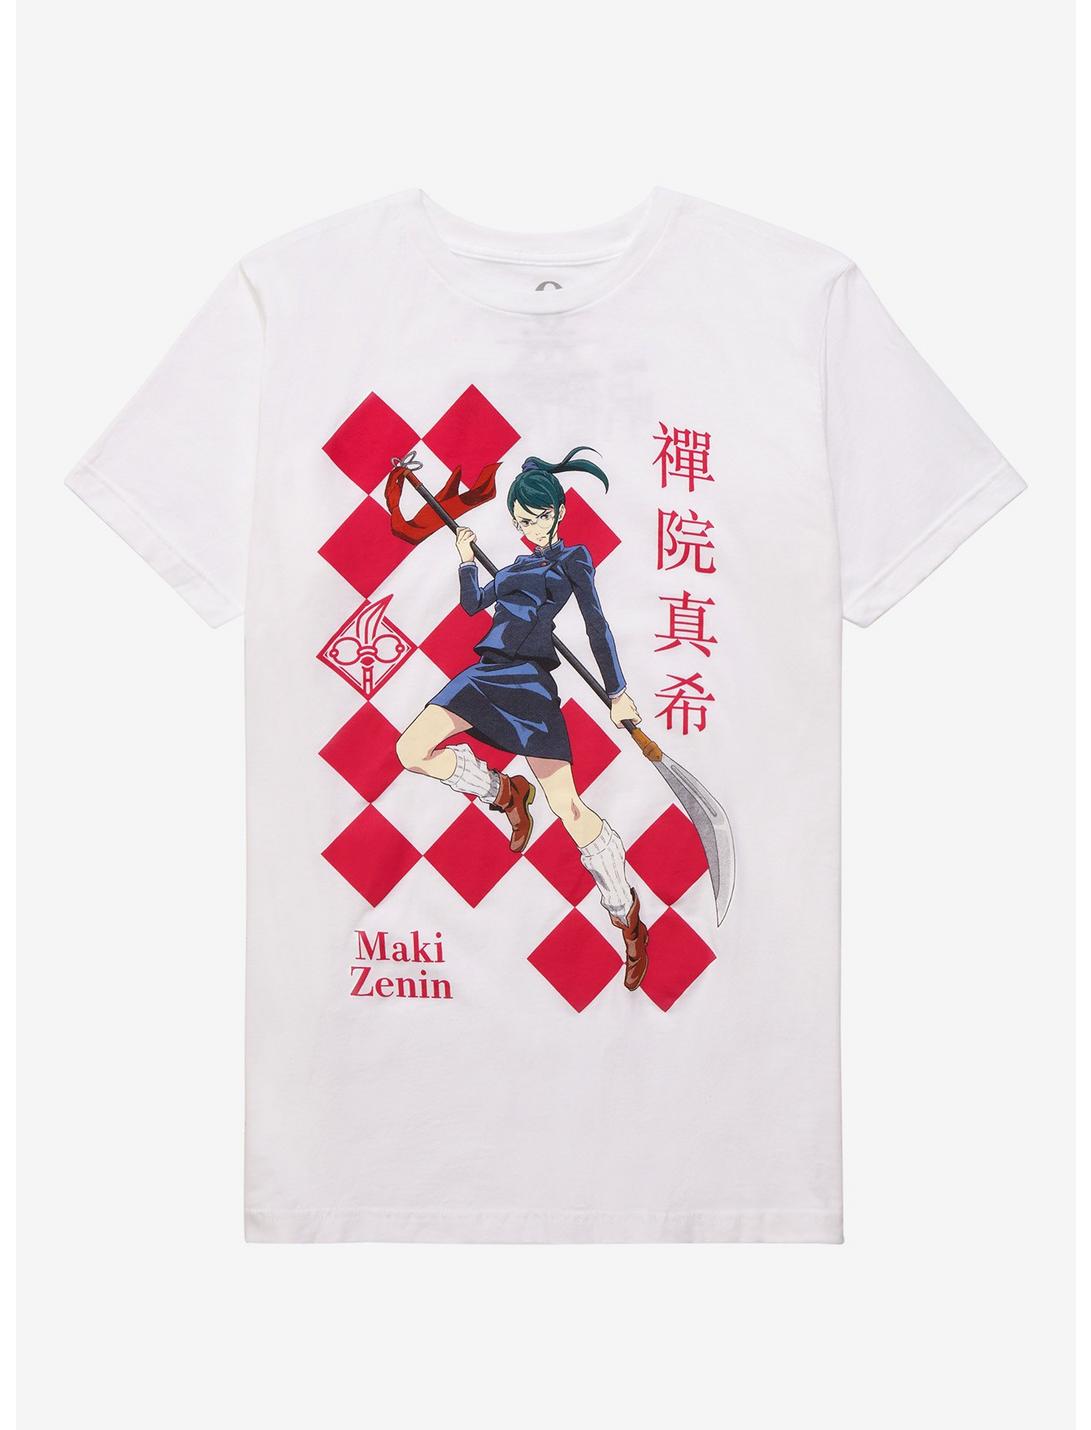 Jujutsu Kaisen 0 Movie Maki Zenin T-Shirt, MULTI, hi-res